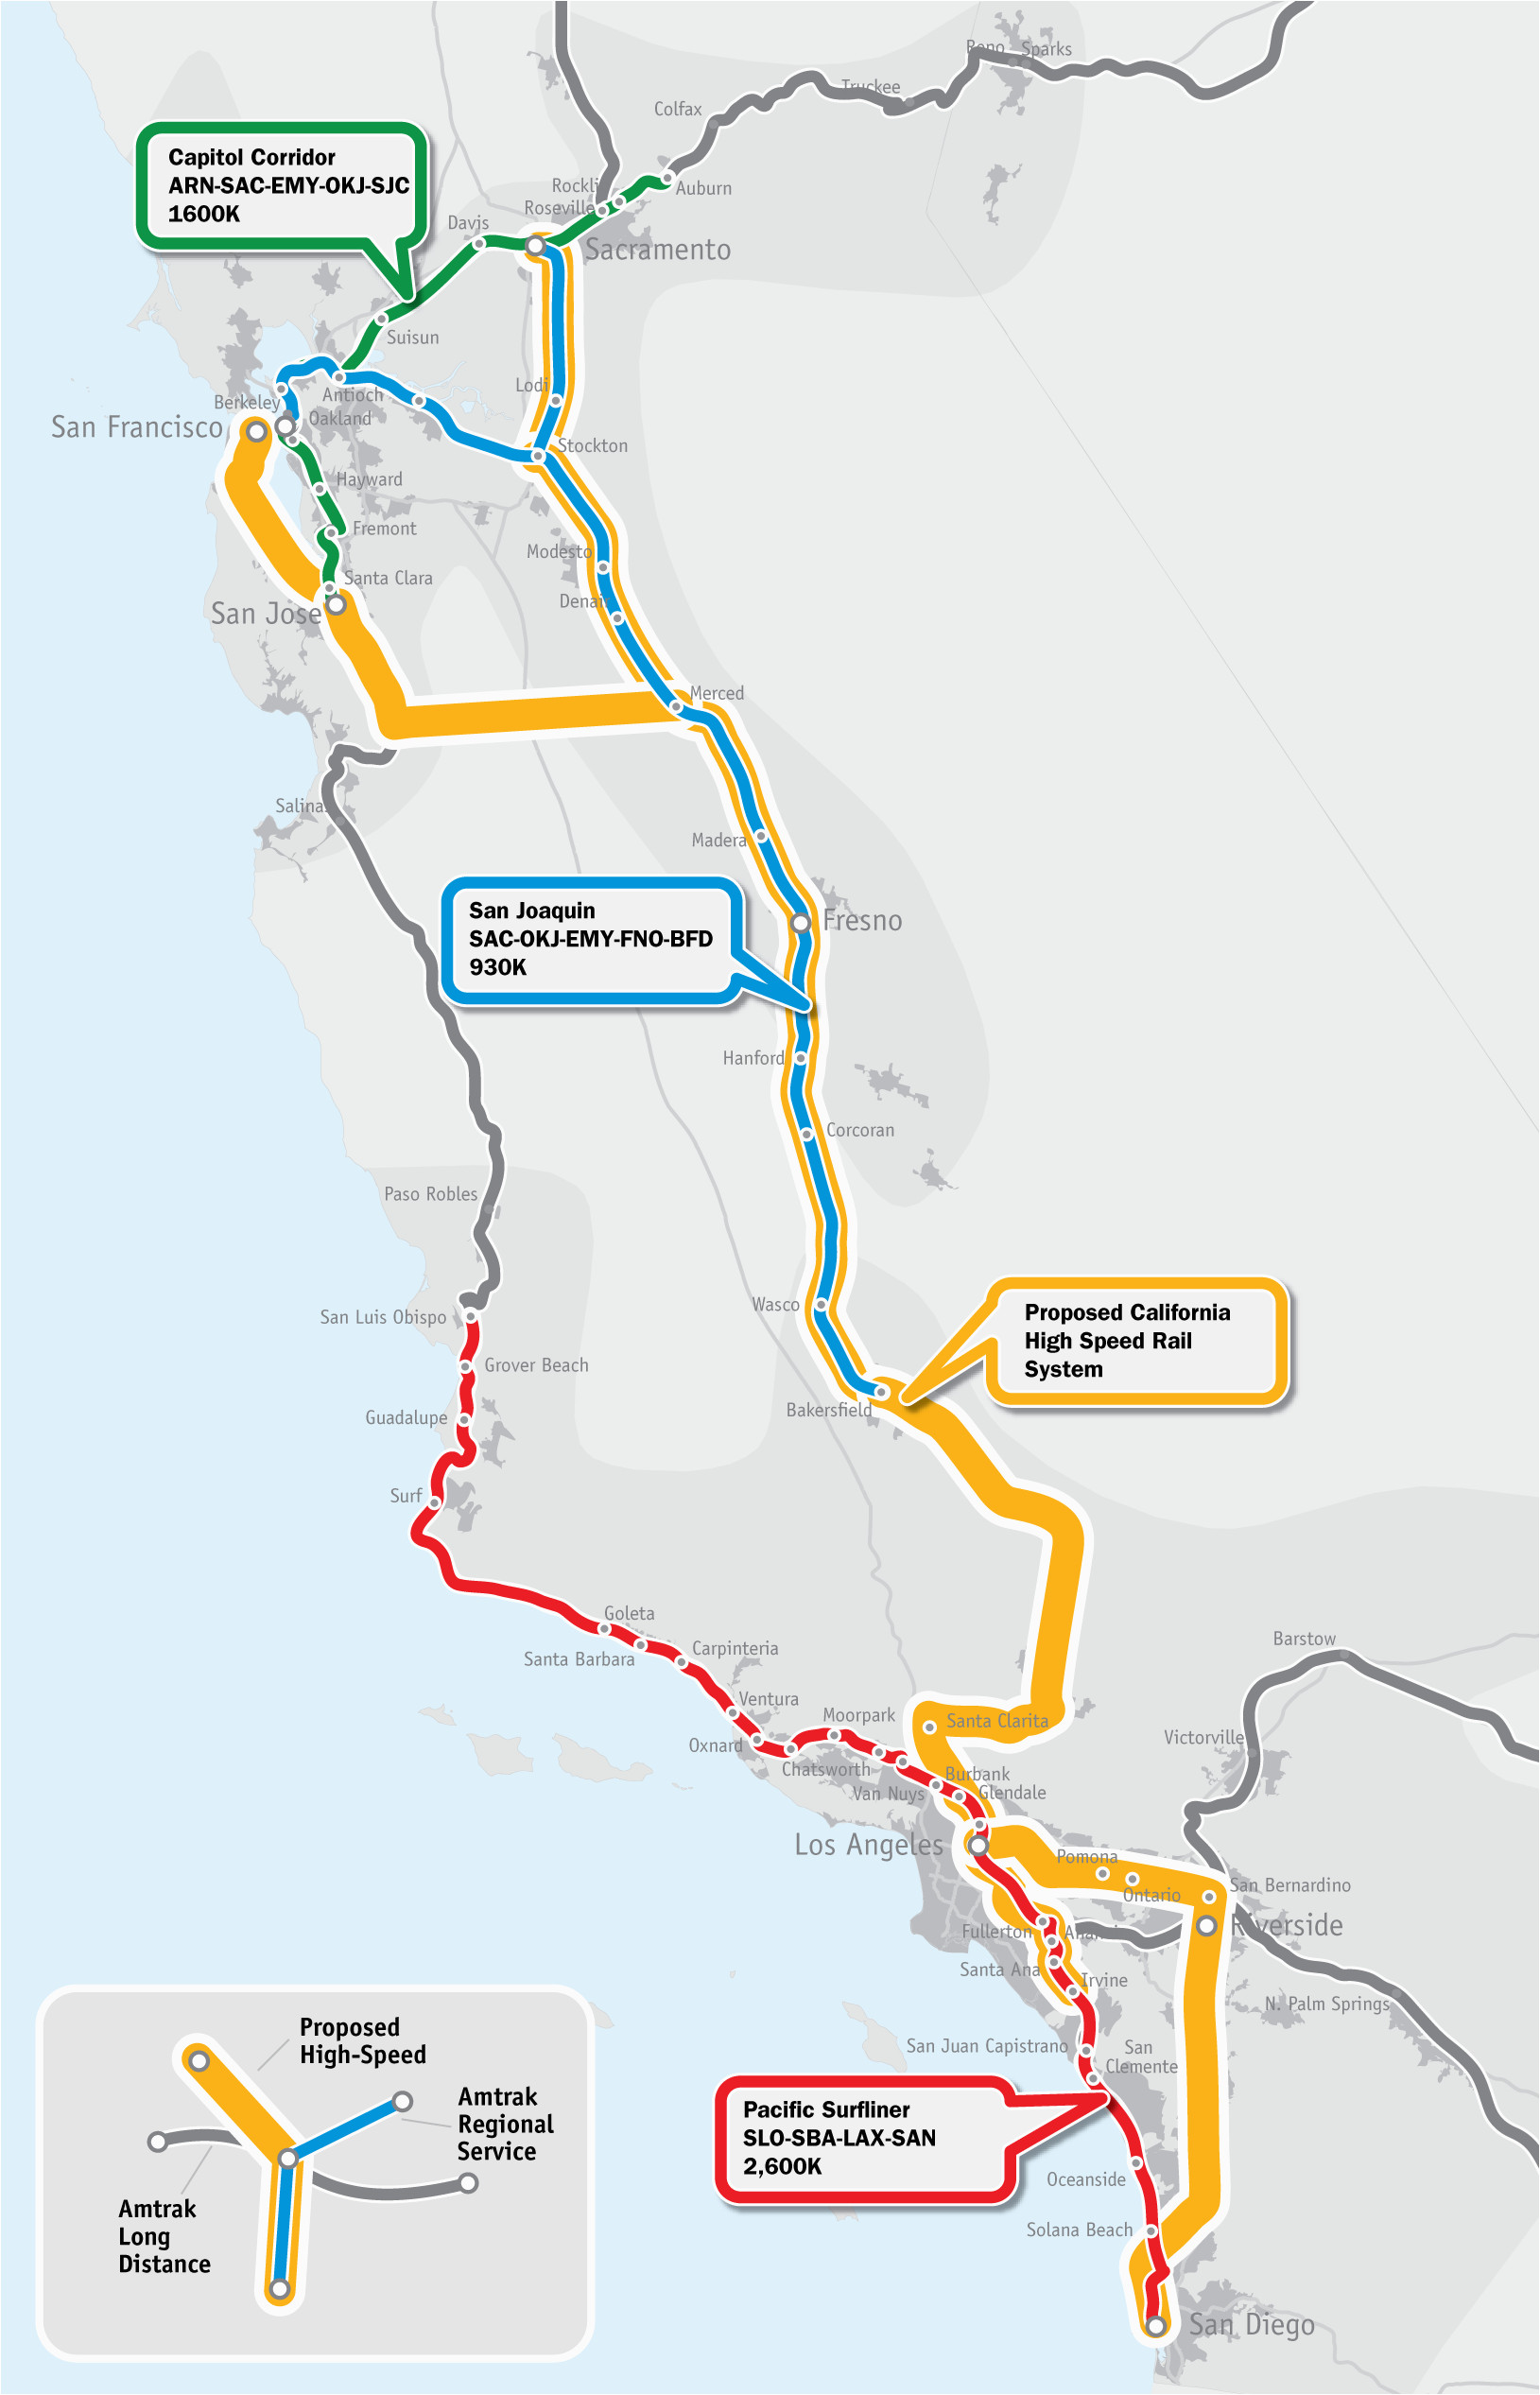 California Bullet Train Map Our Maps America 2050 Of California Bullet Train Map 